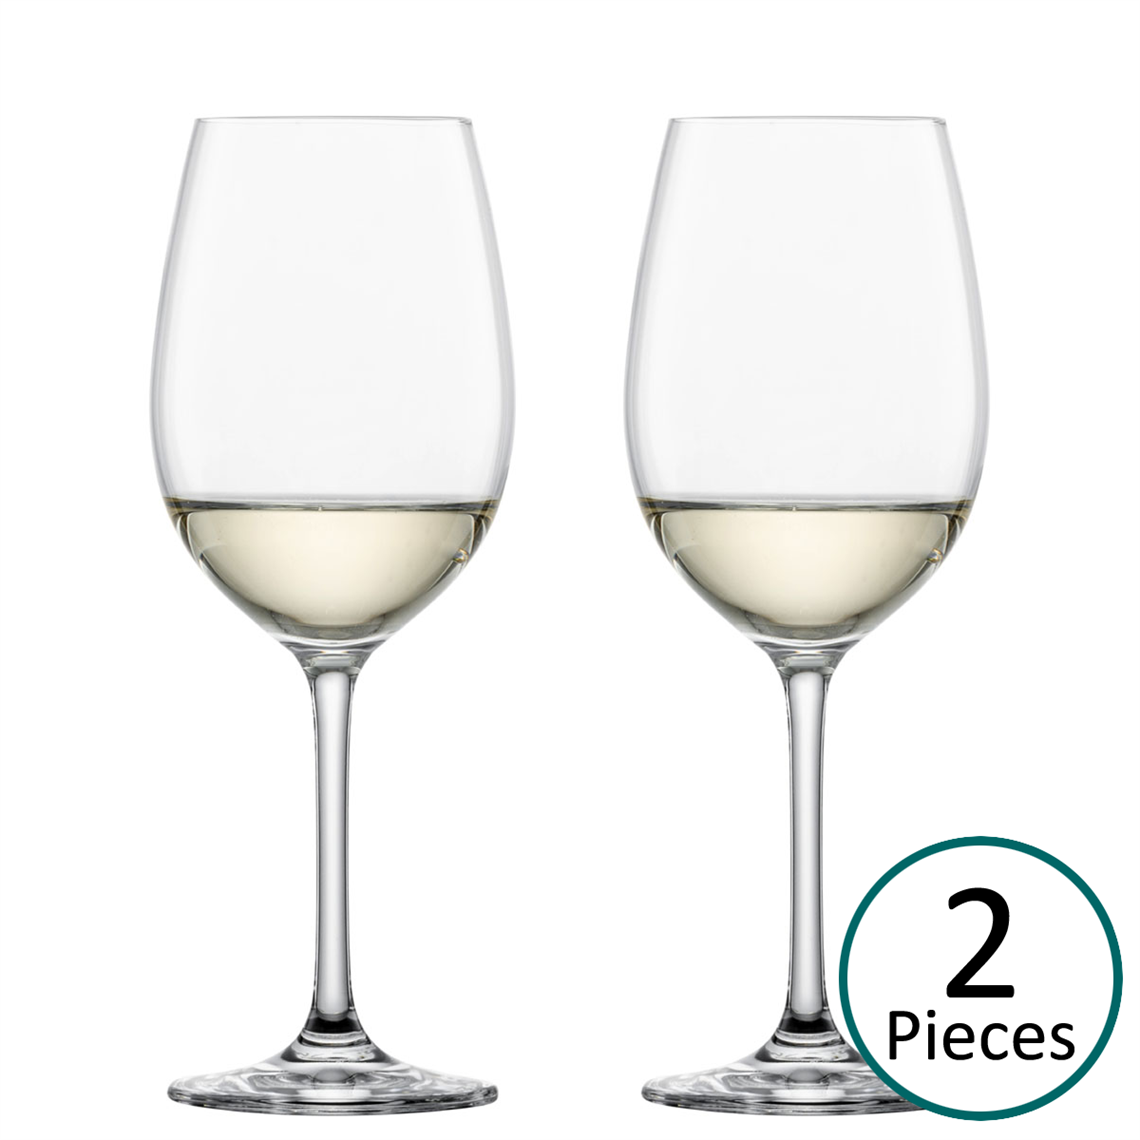 Schott Zwiesel Ivento White Wine Glass - Set of 2